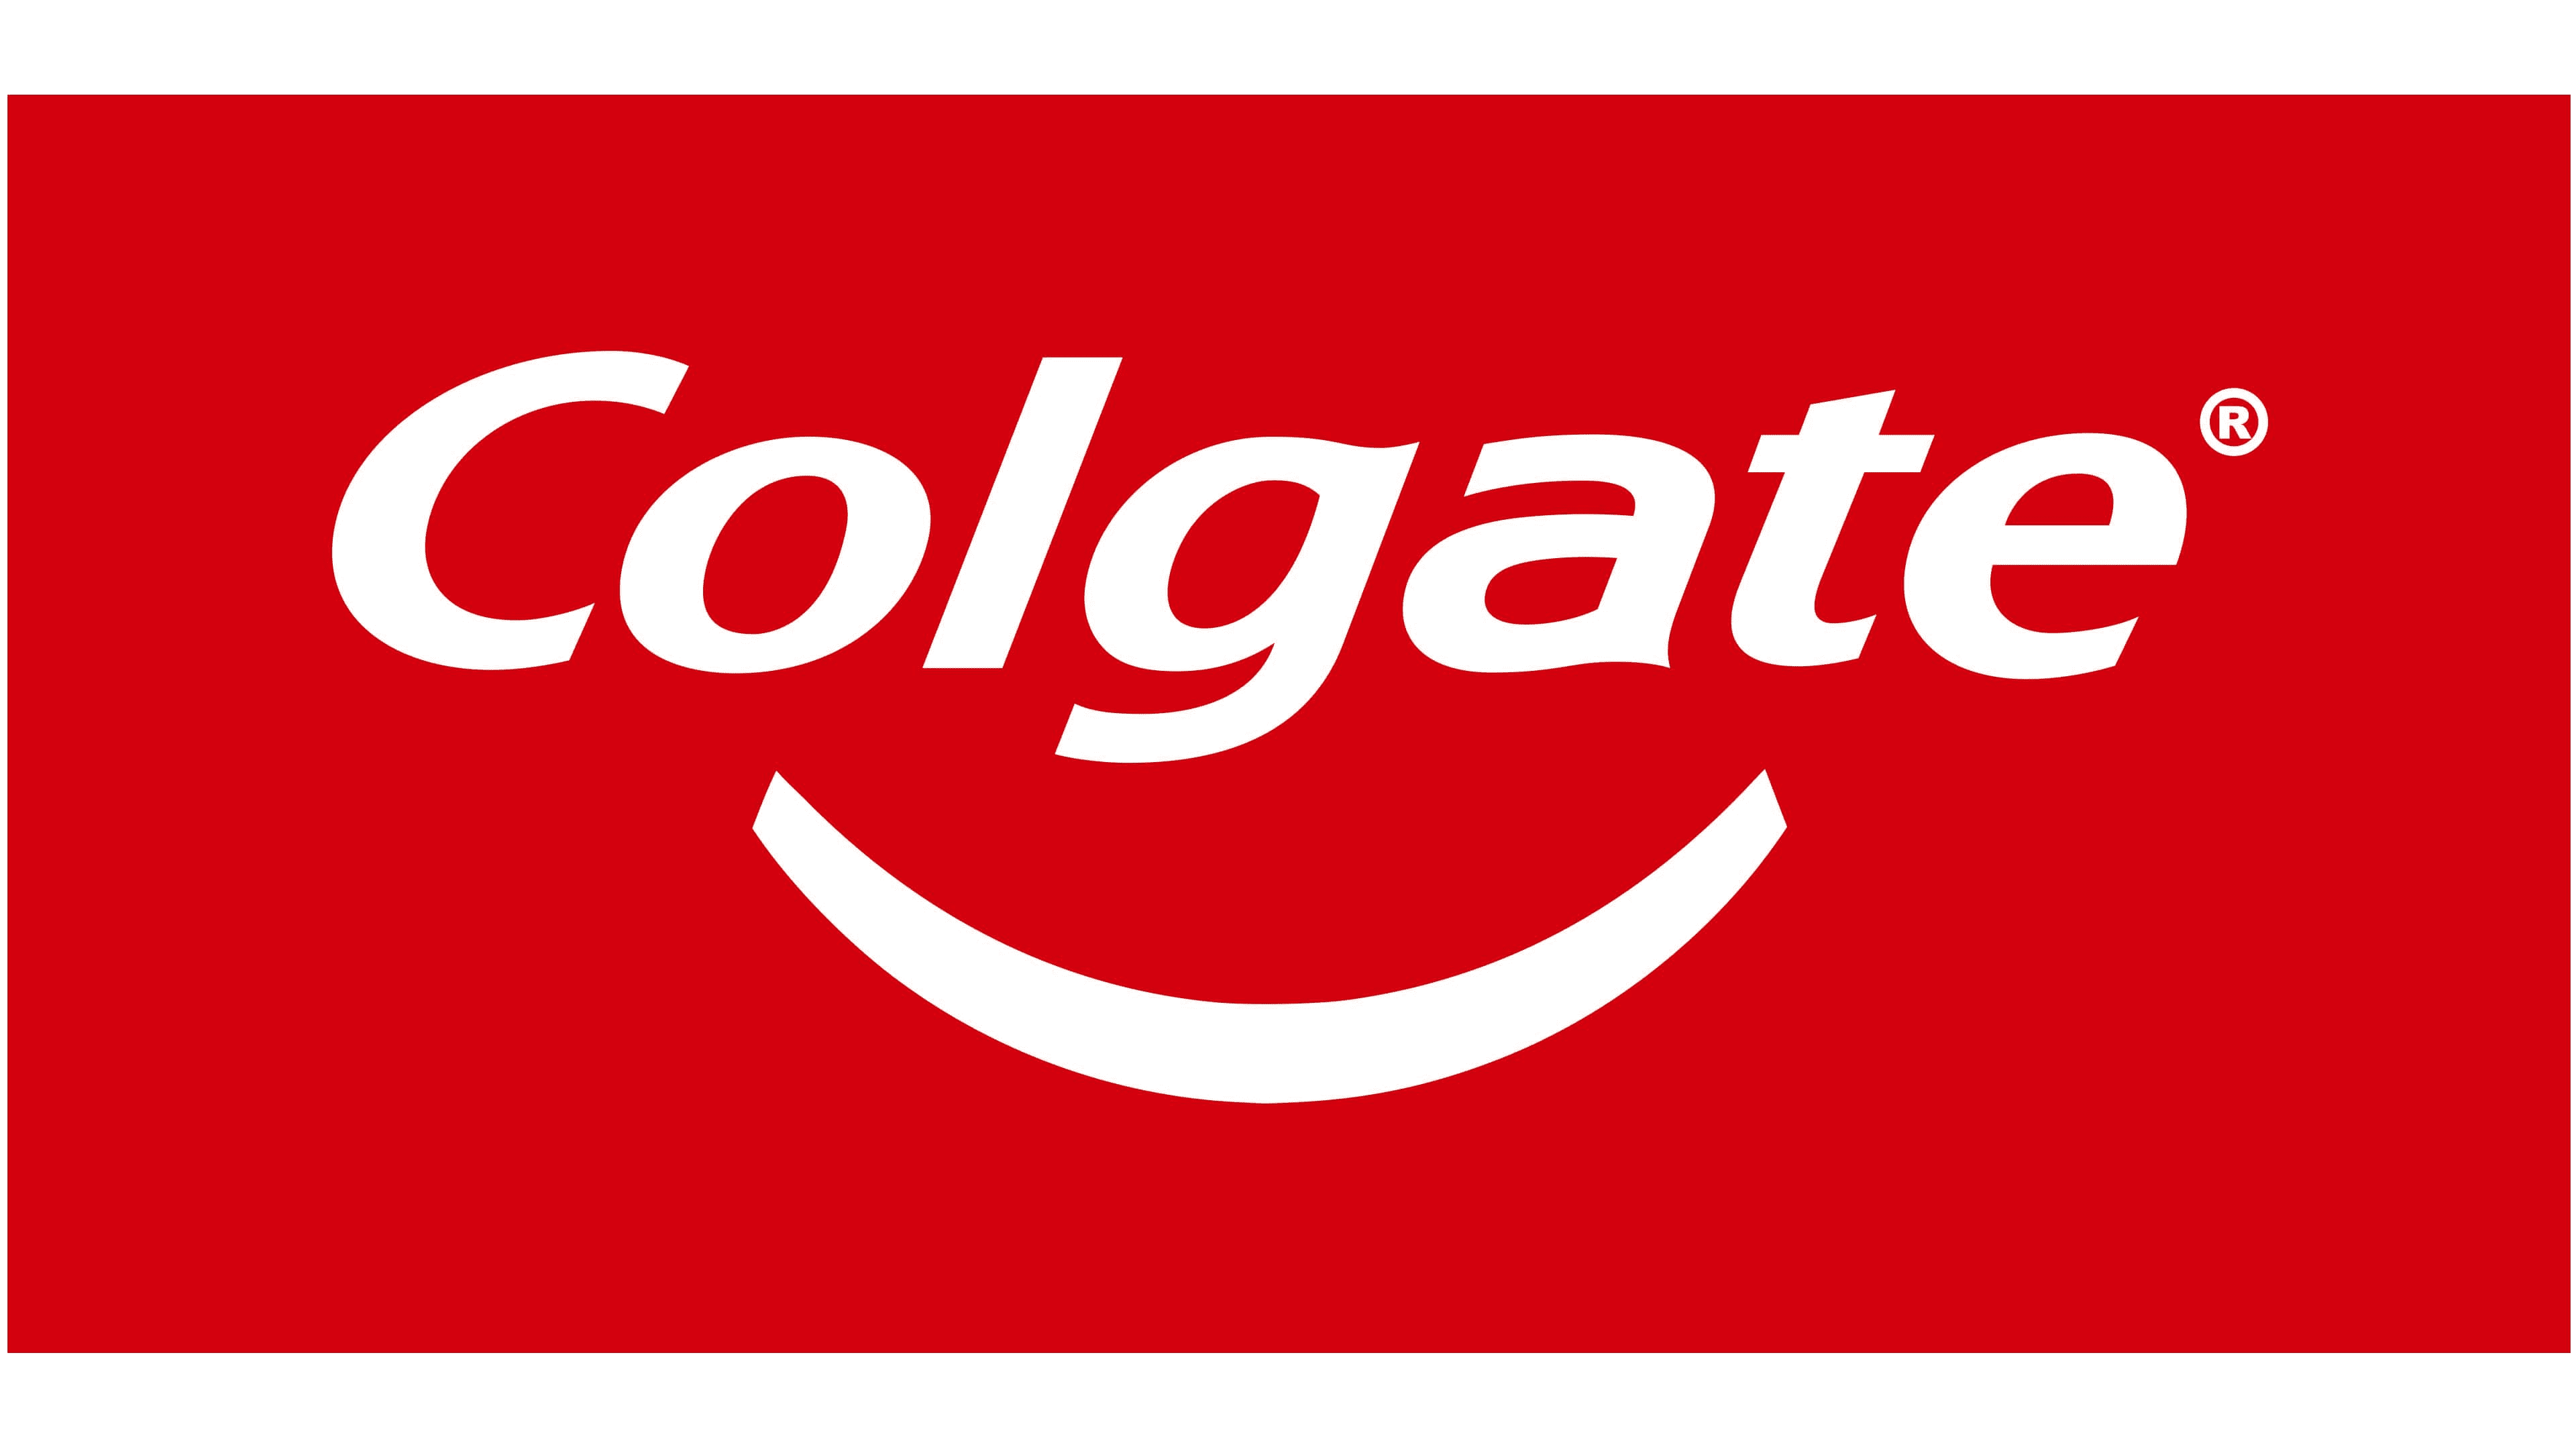 Colgate Image